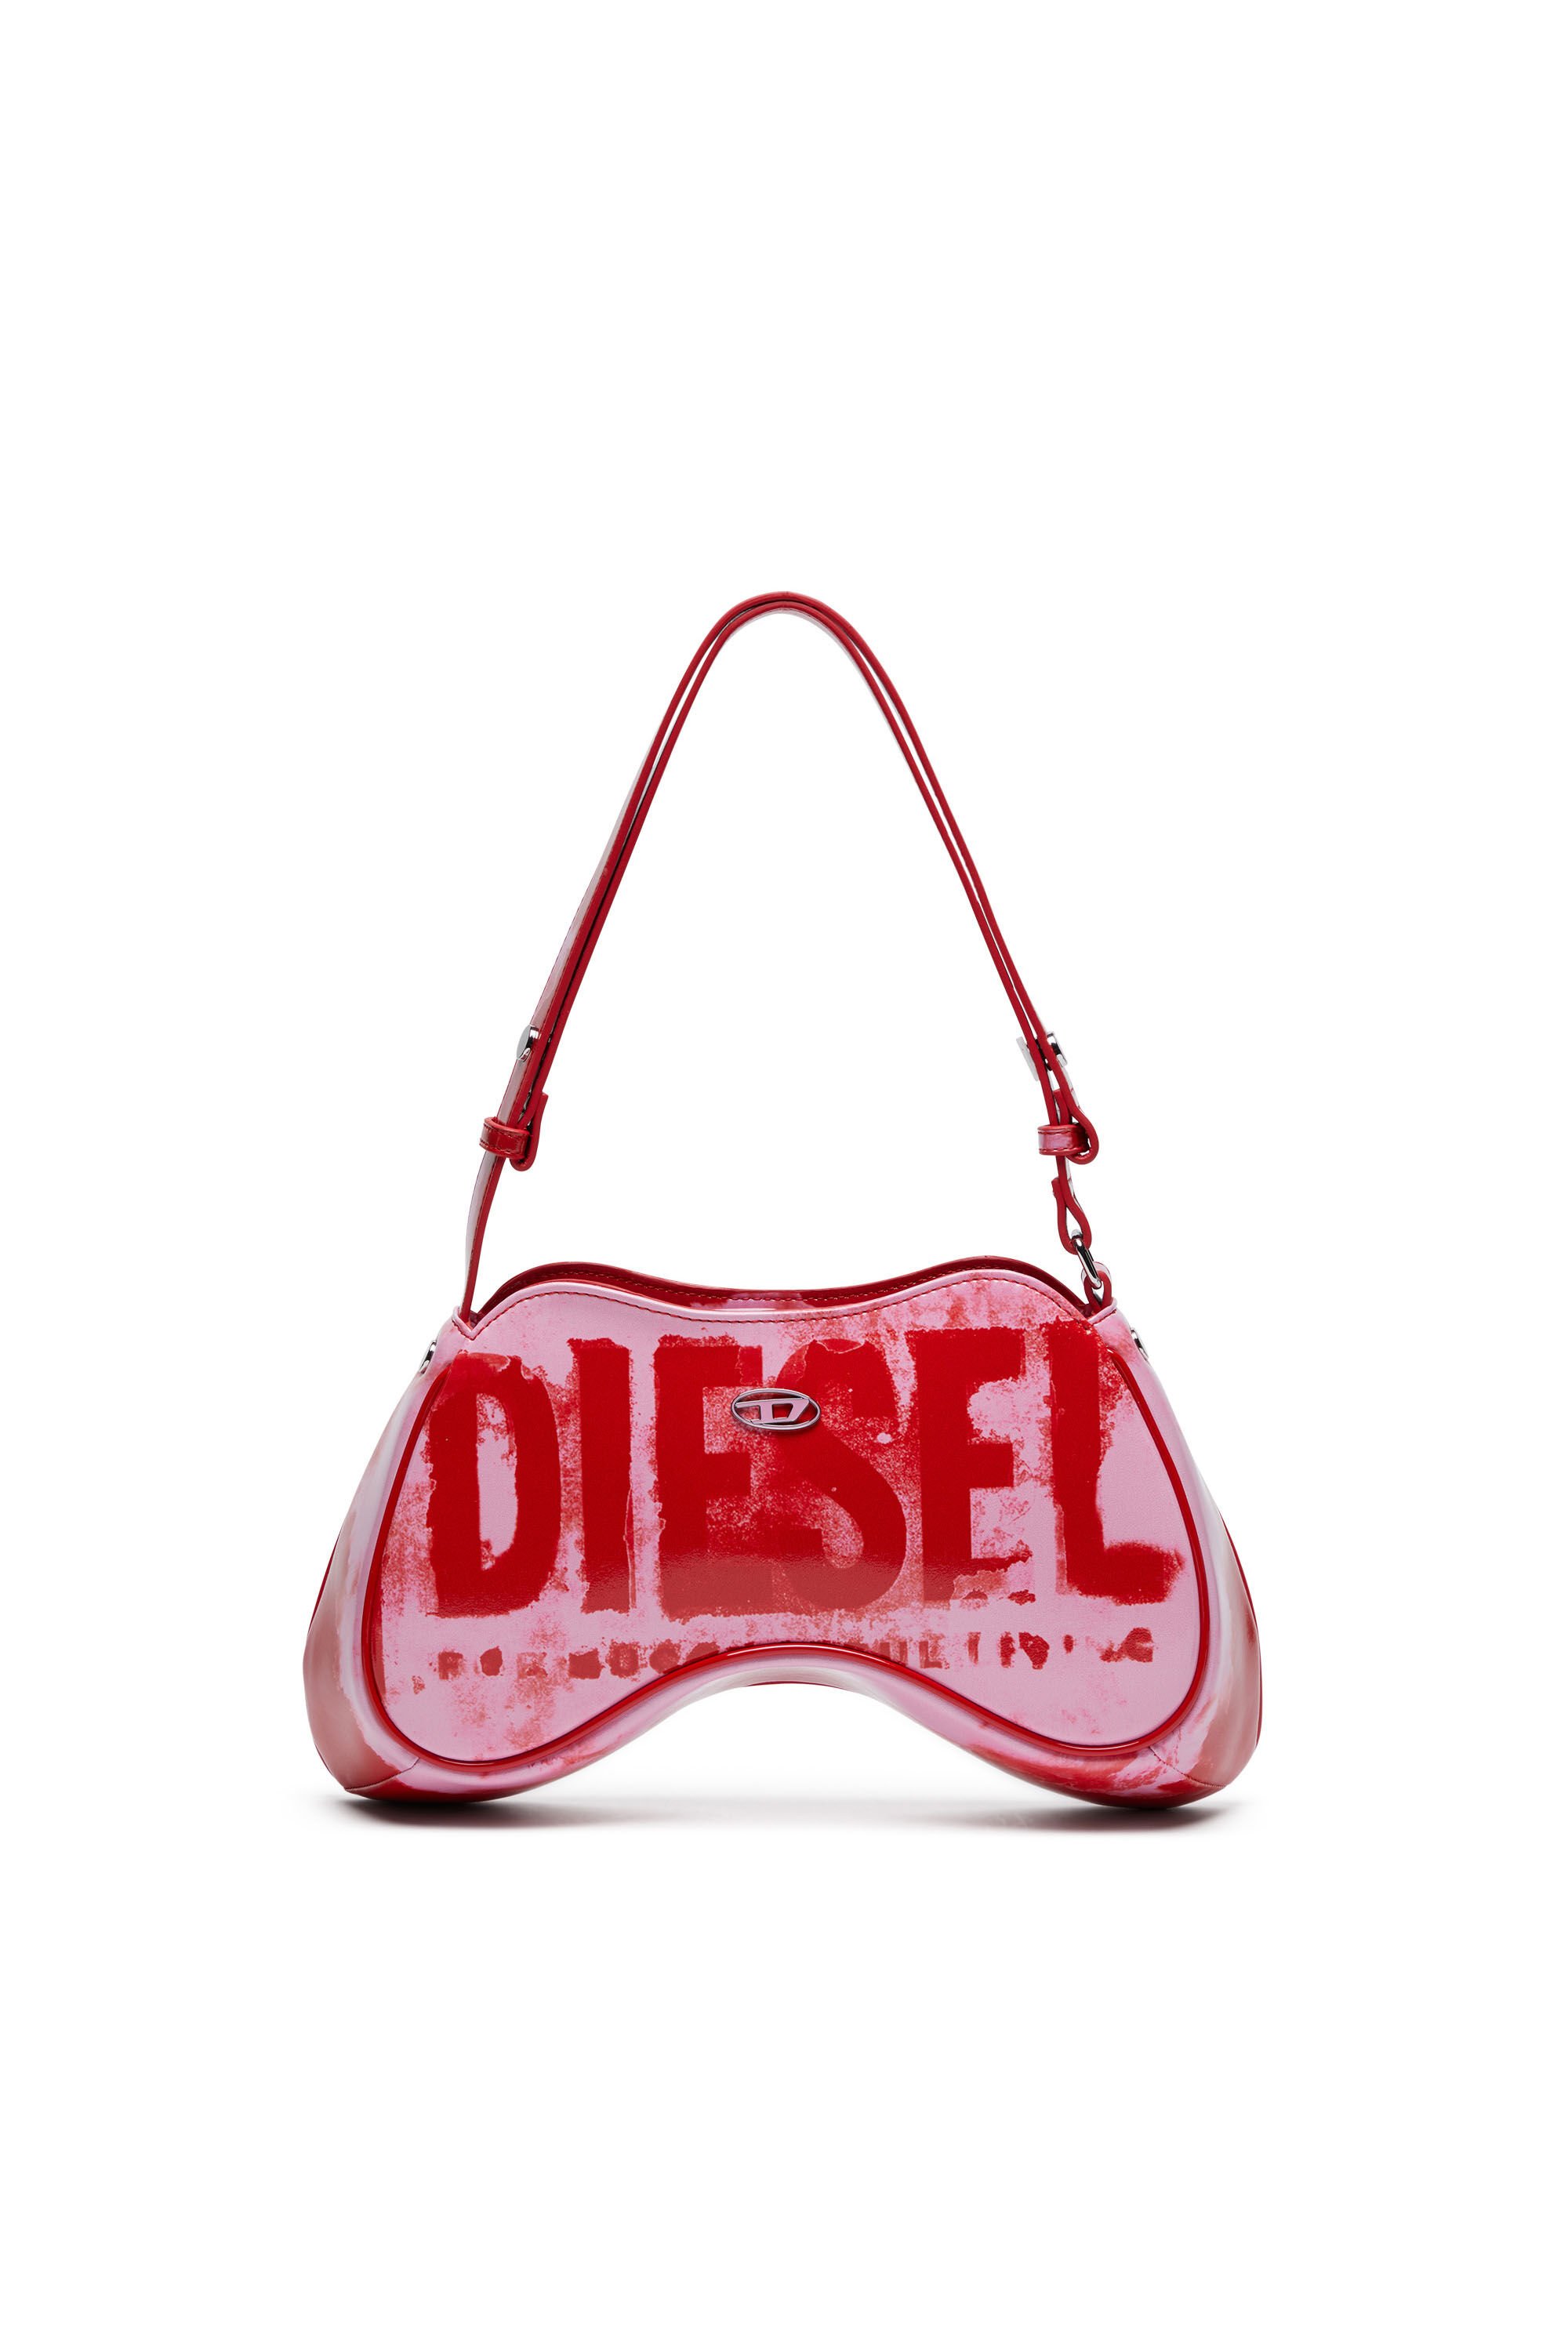 Diesel - PLAY SHOULDER, Rosa/Rosso - Image 1